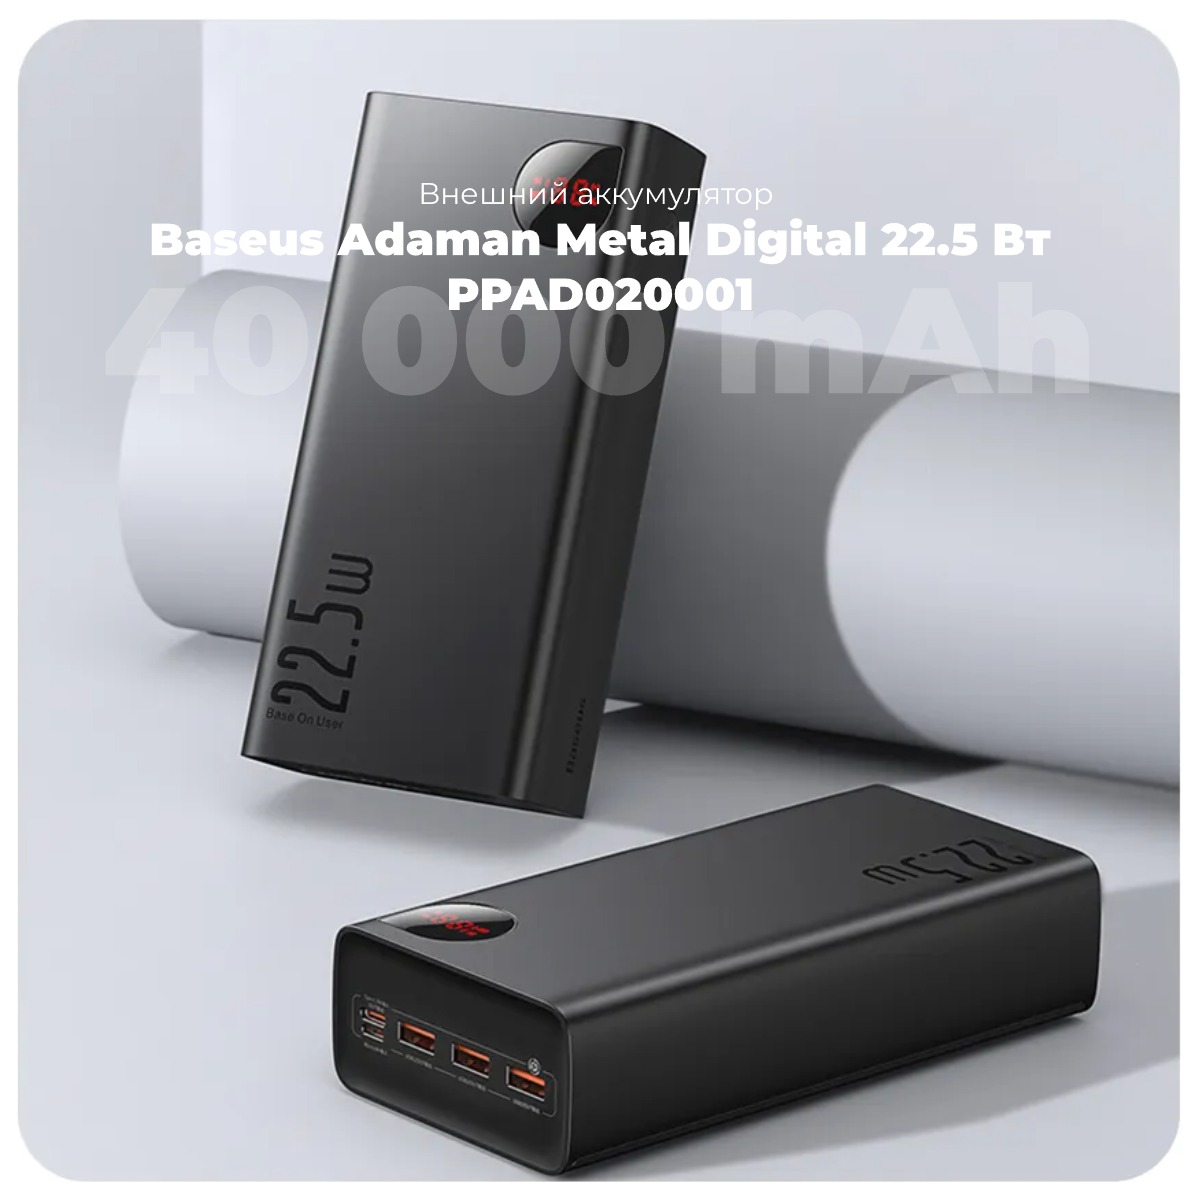 Baseus-Adaman-Metal-Digital-Display-PPAD020001-01